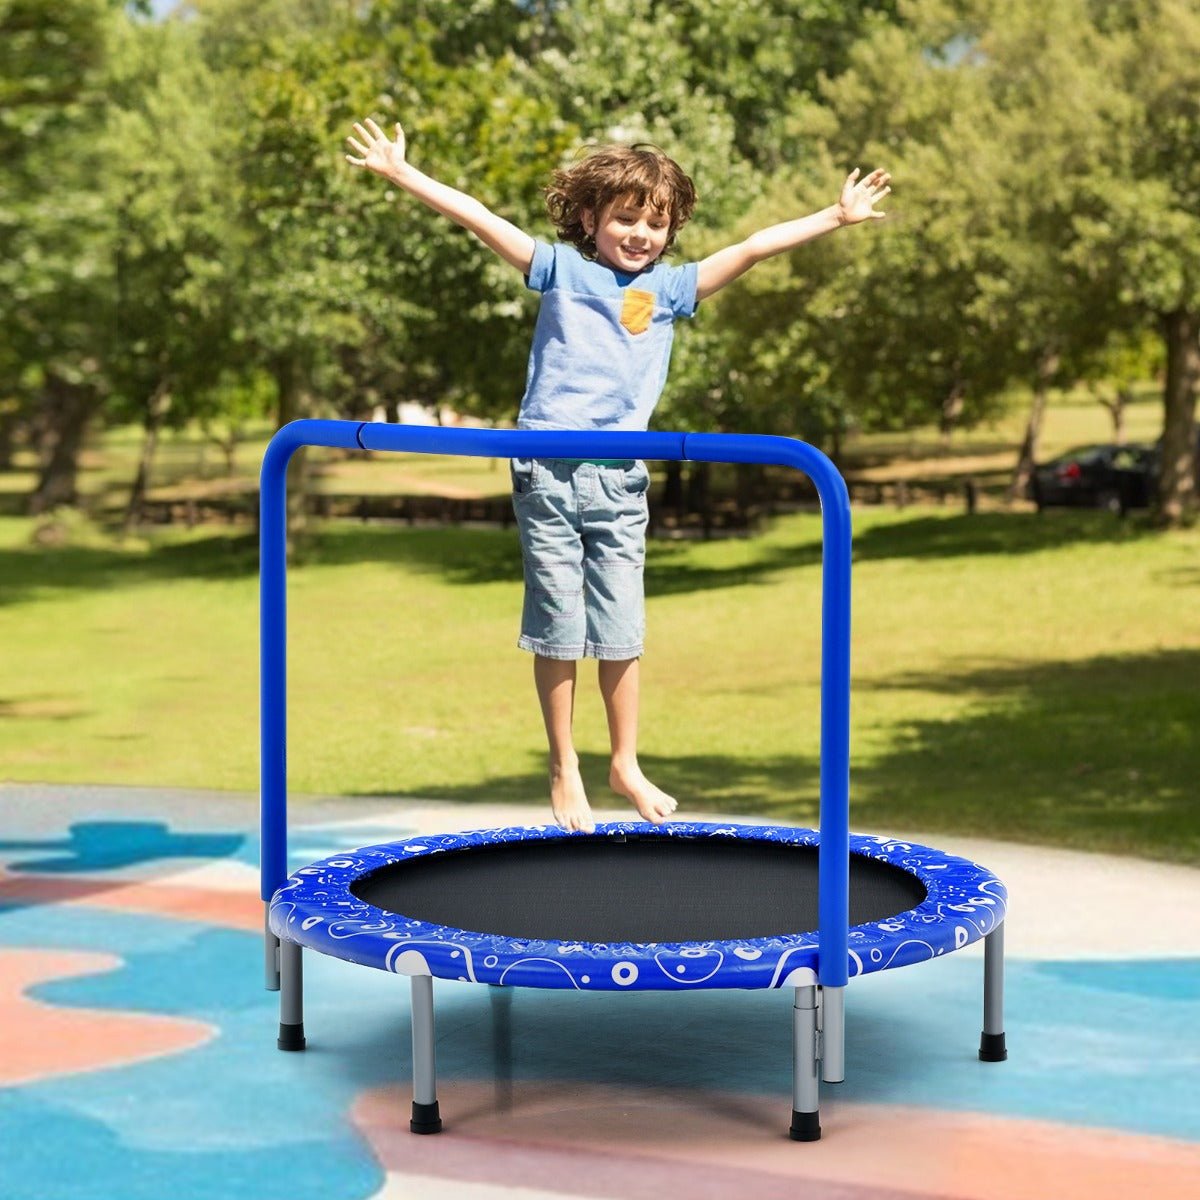 Kids Joy: Foldable Kids Trampoline with Handle for Indoor & Outdoor-Blue